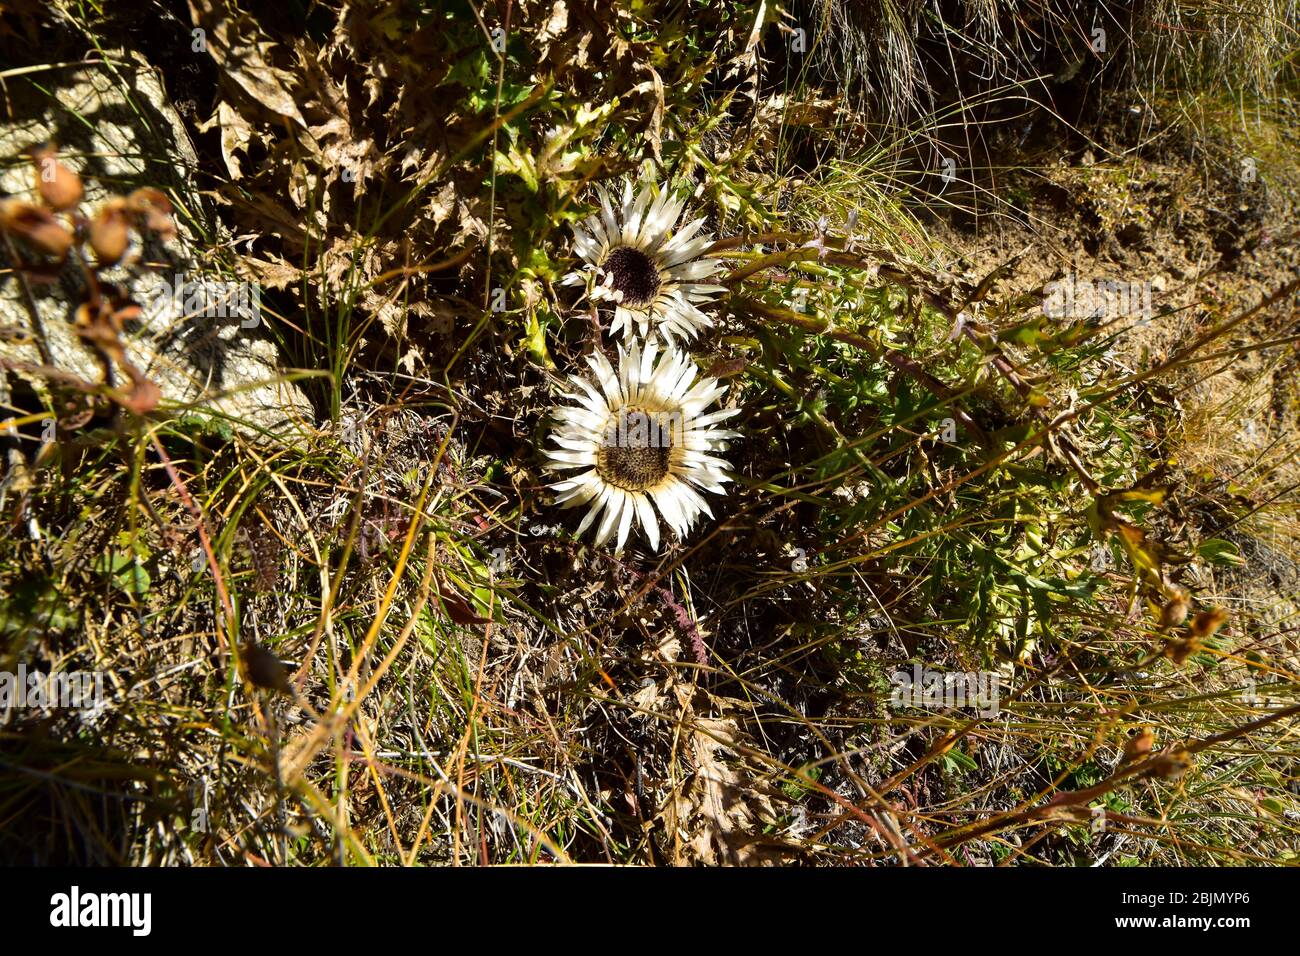 Flowers of Stemless Carline Thistle (Carlina acaulis). Stock Photo